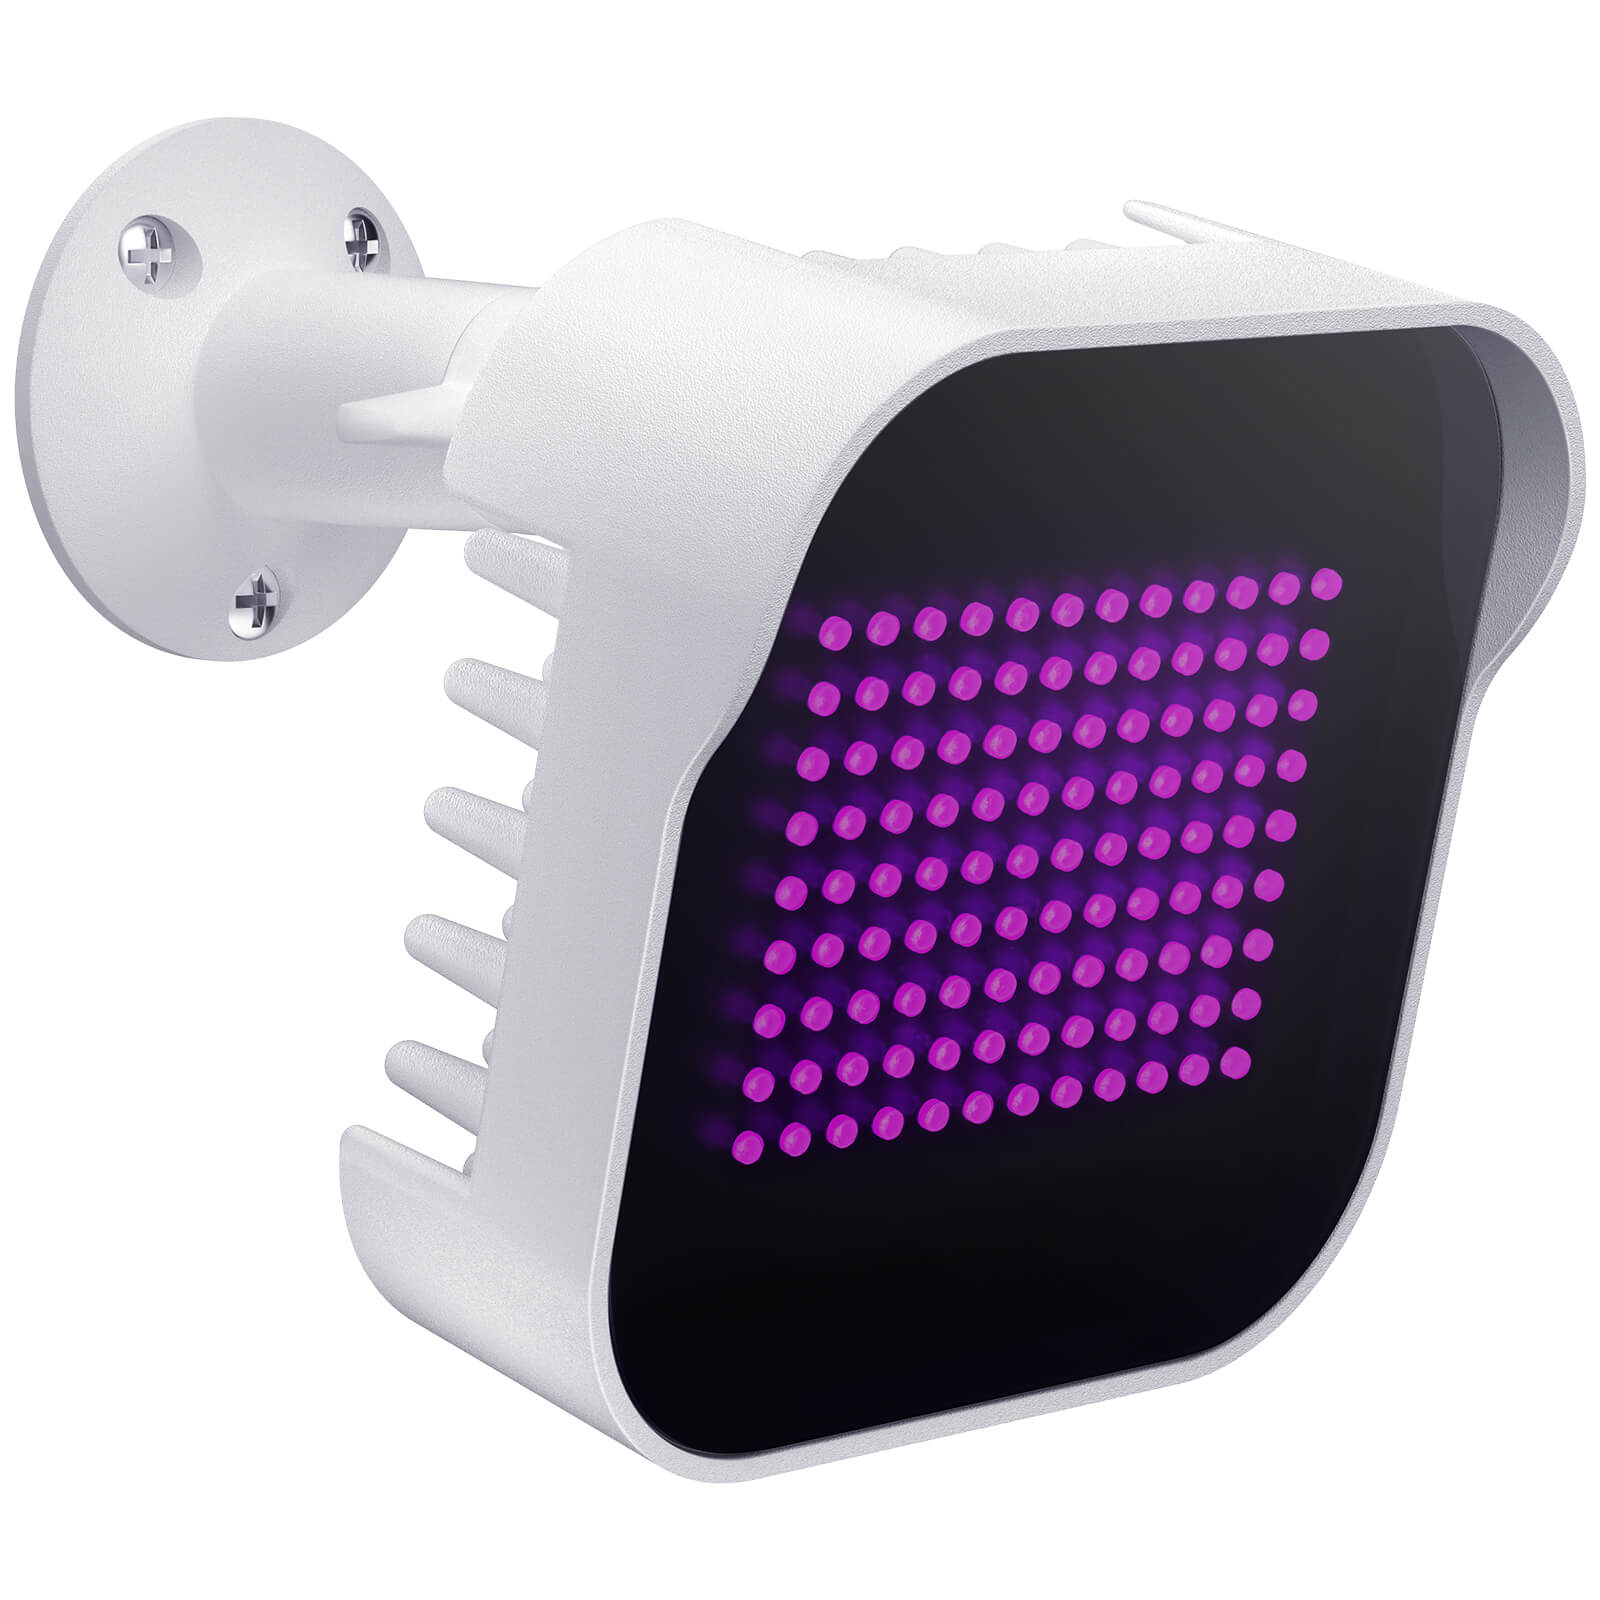 Tendelux  IR Illuminators & Specialized LED Lighting